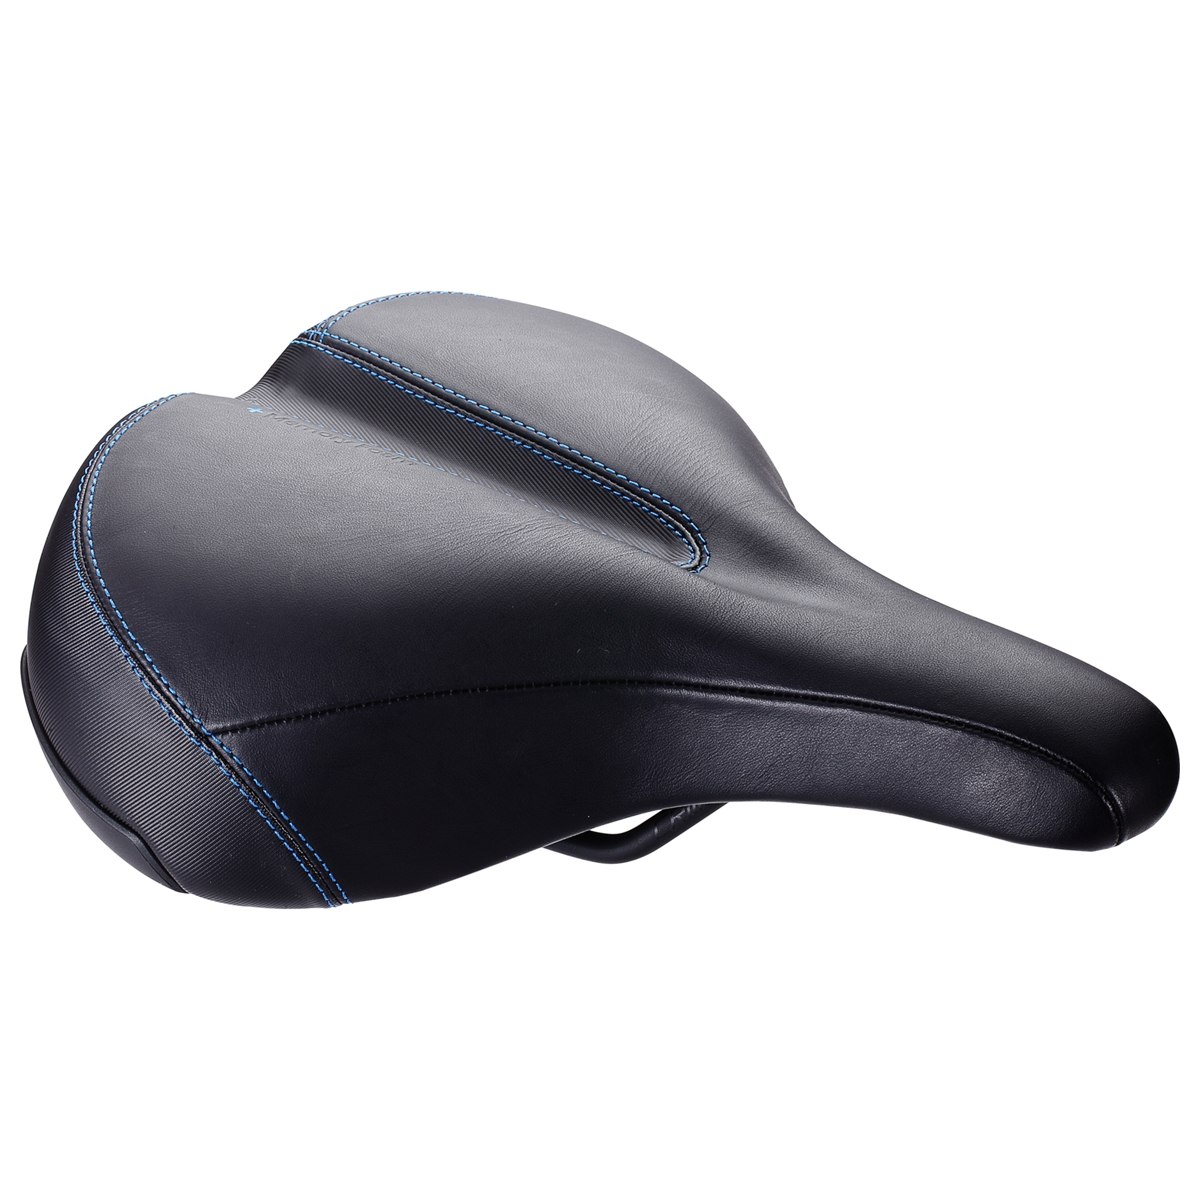 Produktbild von BBB Cycling ComfortPlus Relaxed Leather BSD-103 Sattel - schwarz